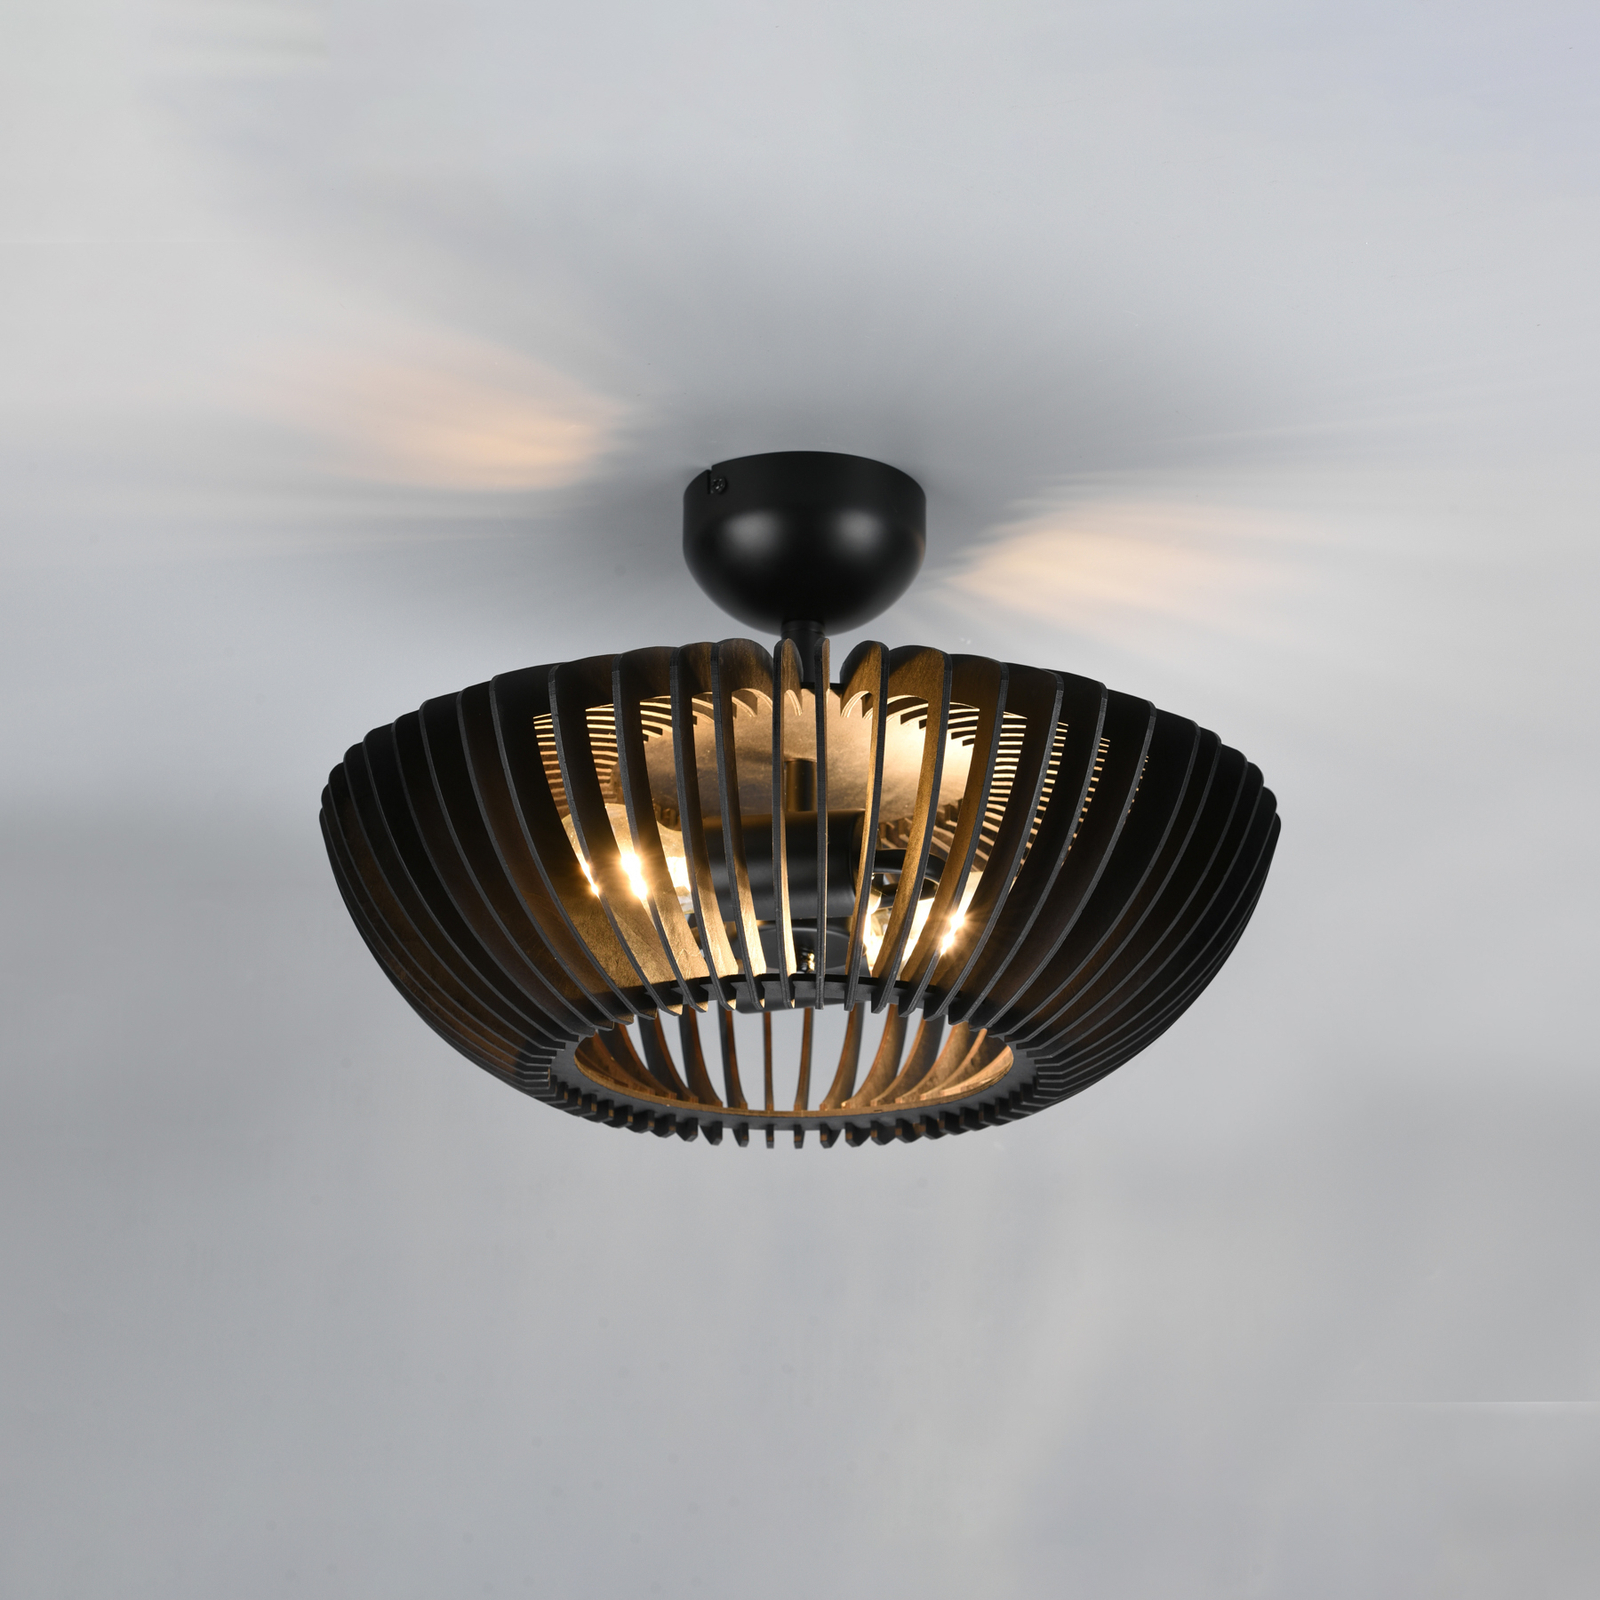 Plafondlamp Colino van houtlamellen, zwart